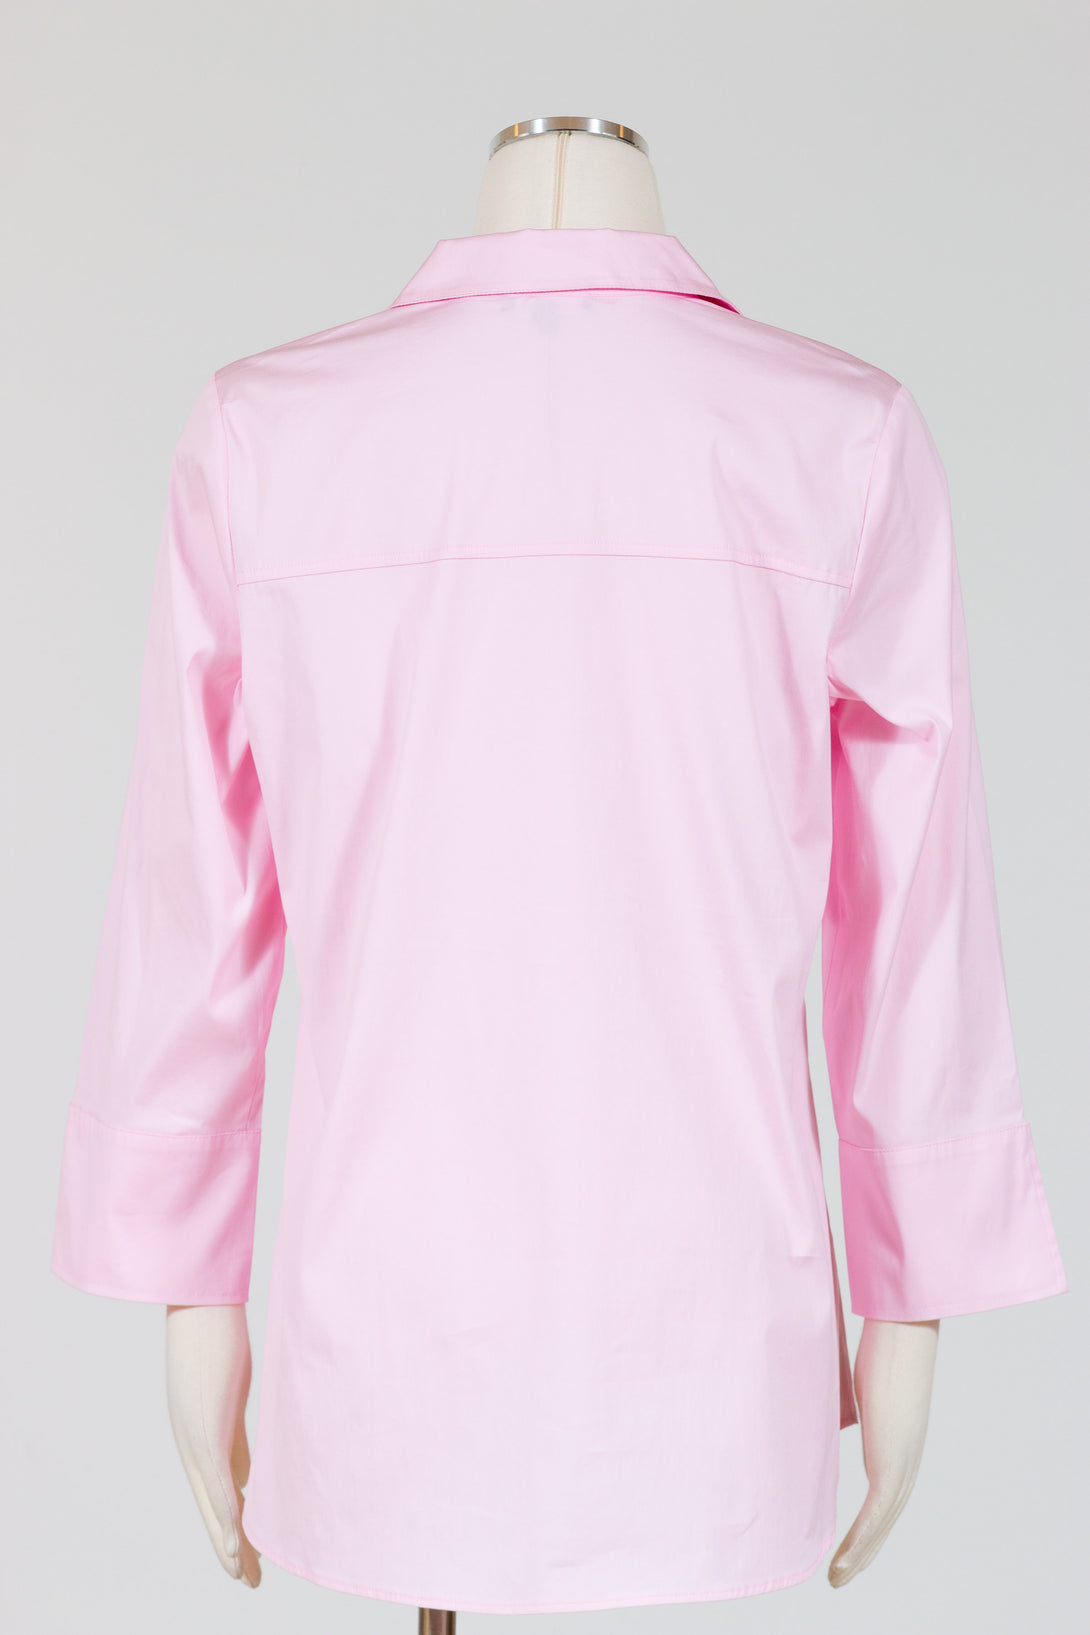 Habitat-HiddenPlacket-Shirt-Peony-Pink